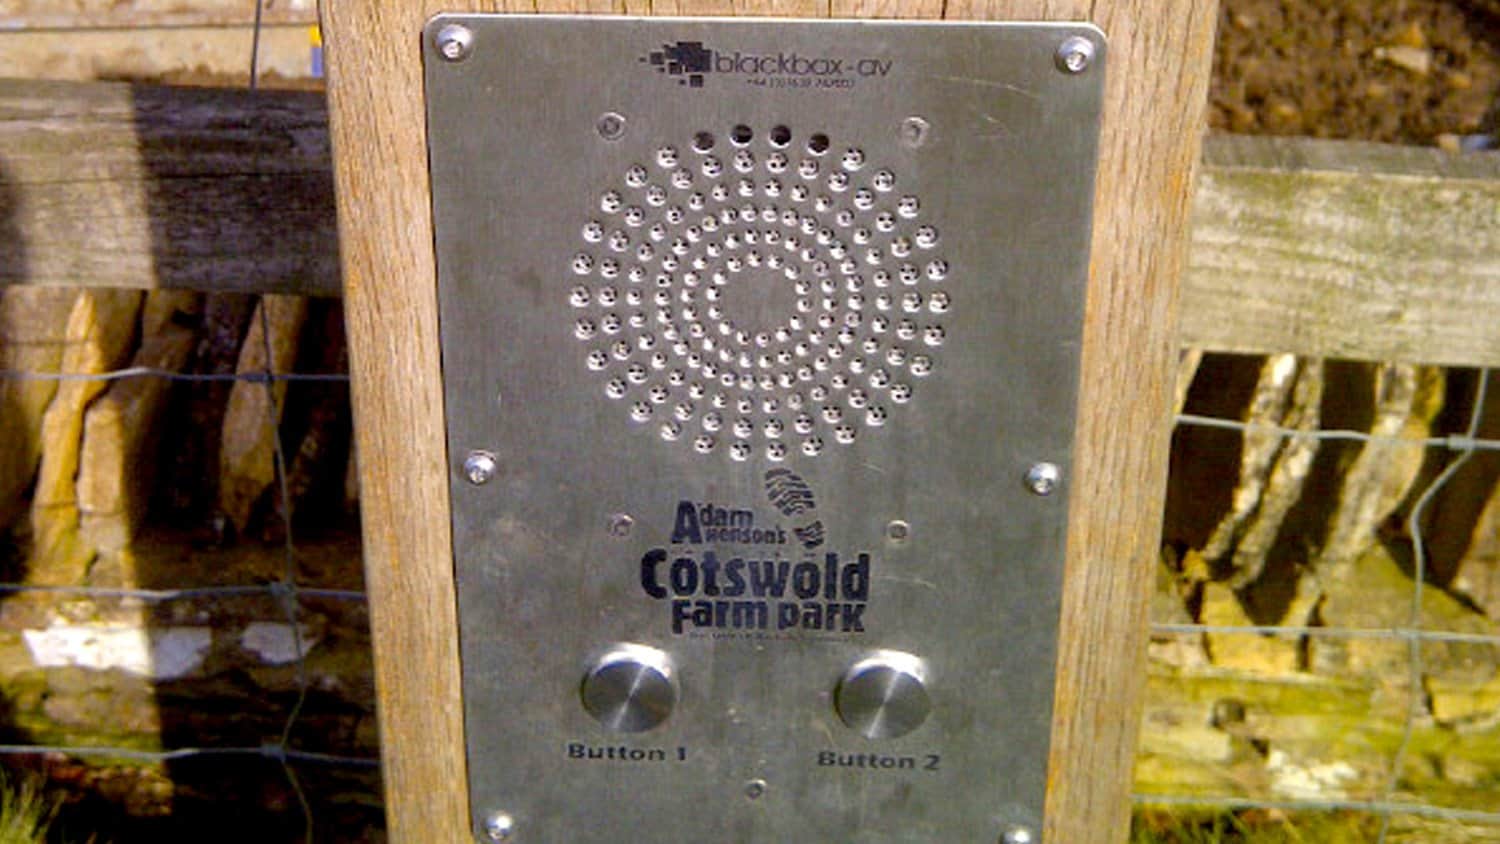 Solar Audio Post supplied by Blackbox-av for Adam Henson's Cotswold Farm Park